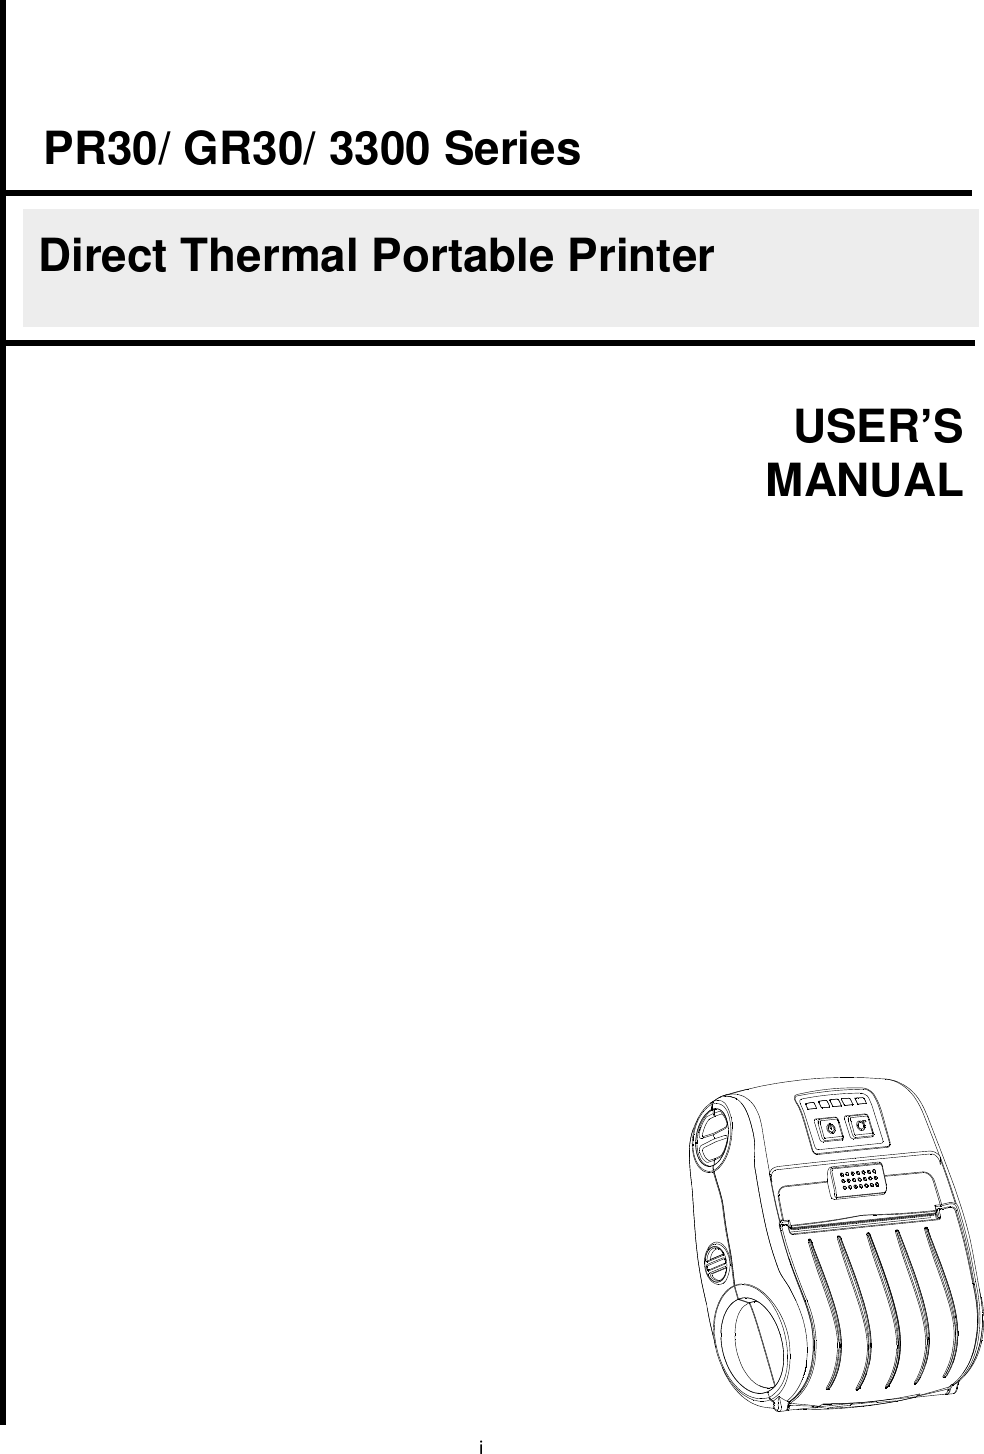 i                                      USER’S      MANUAL PR30/ GR30/ 3300 Series  Direct Thermal Portable Printer 